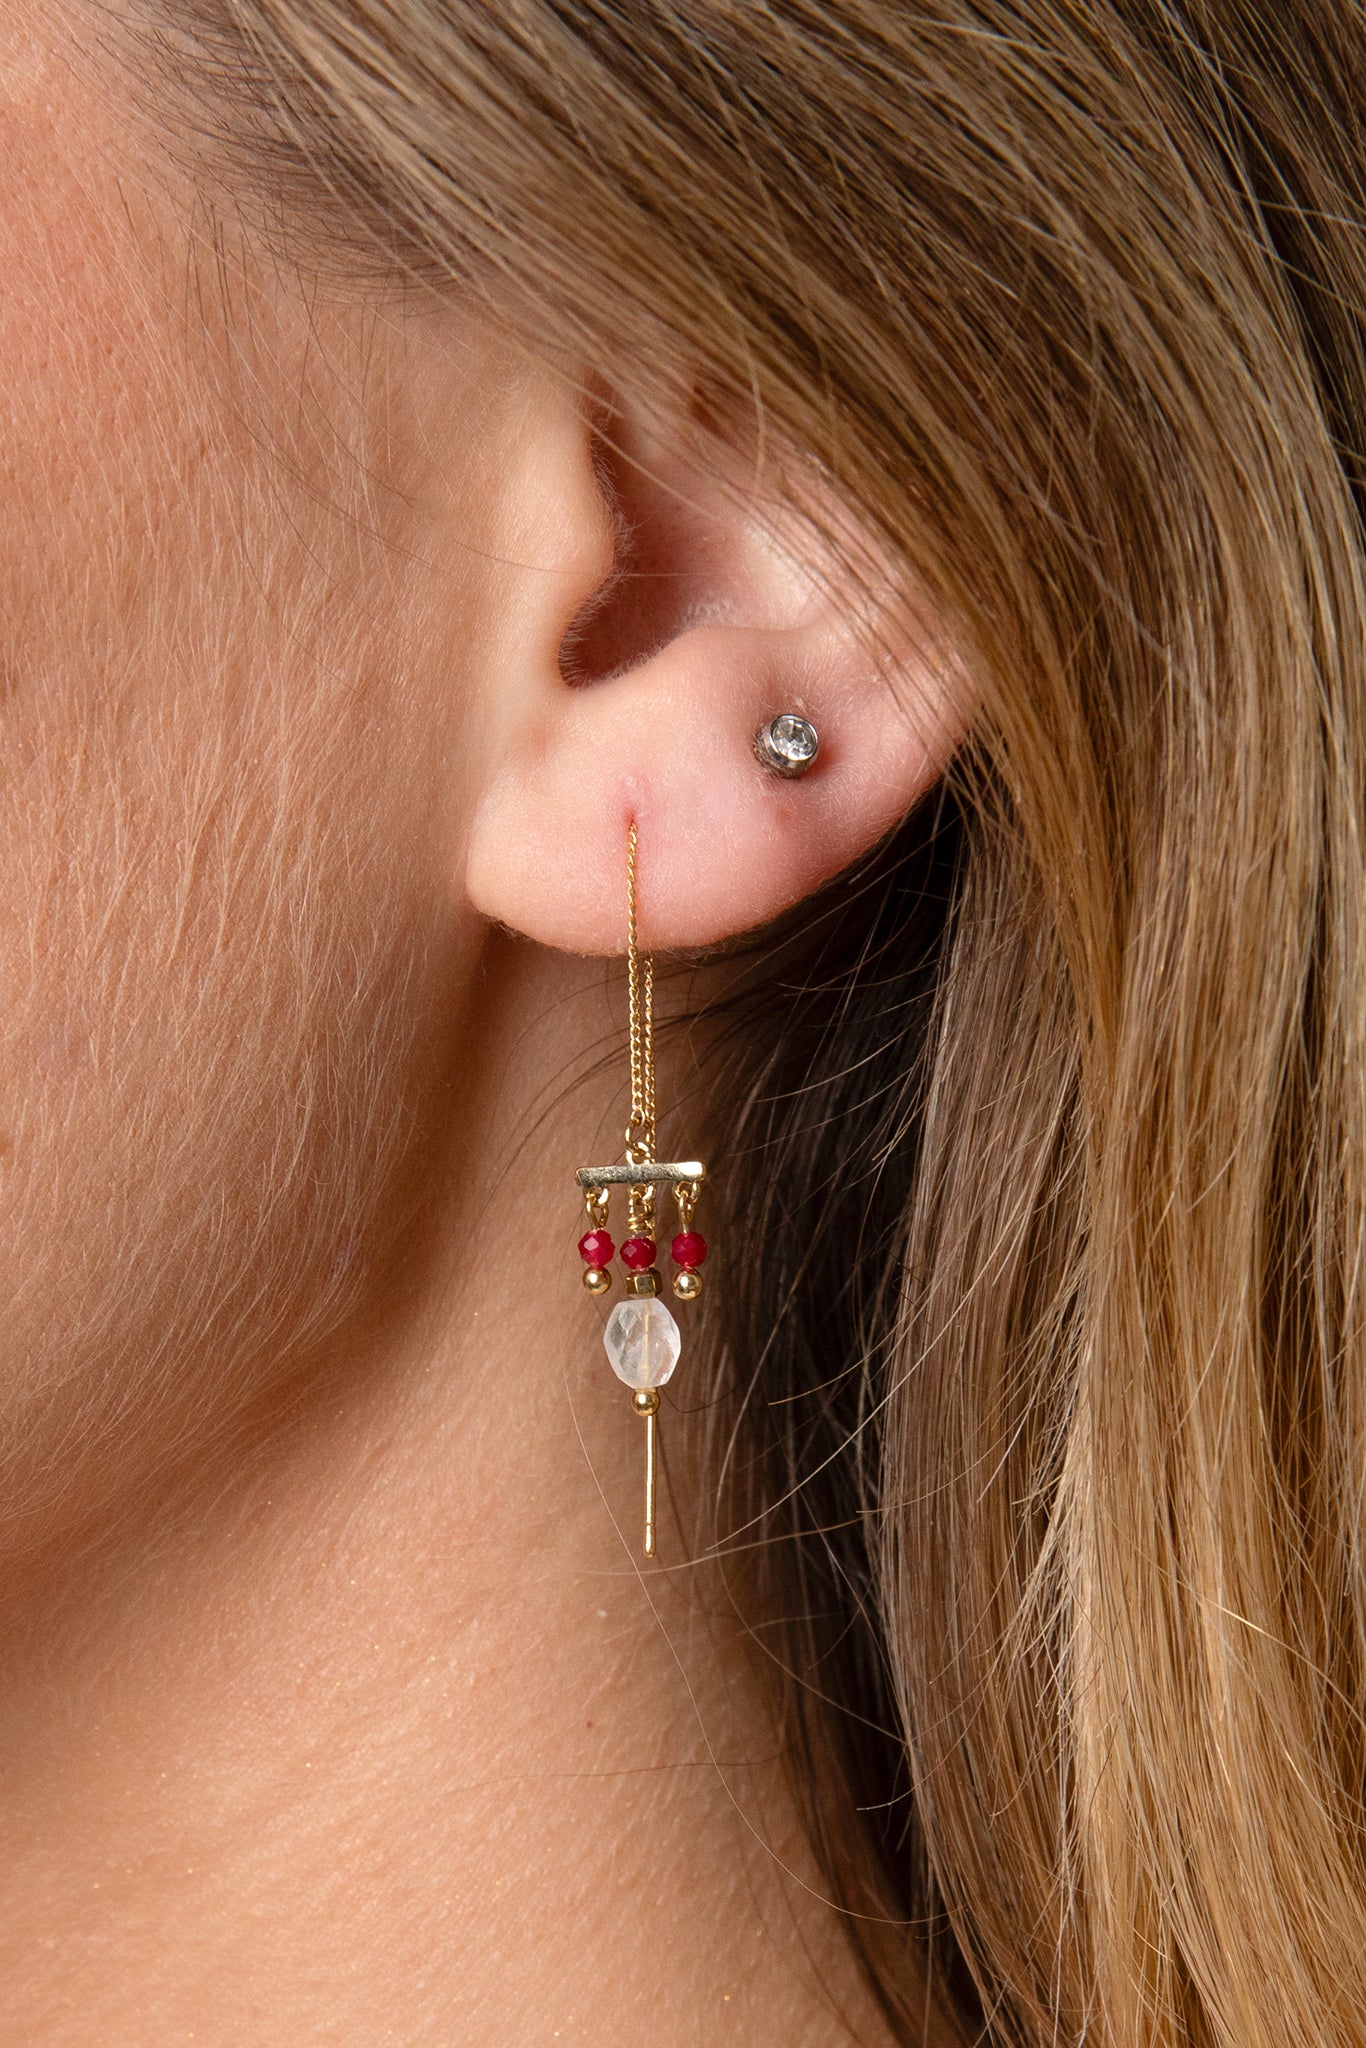 SG17 - Waterfall earrings - Garnet